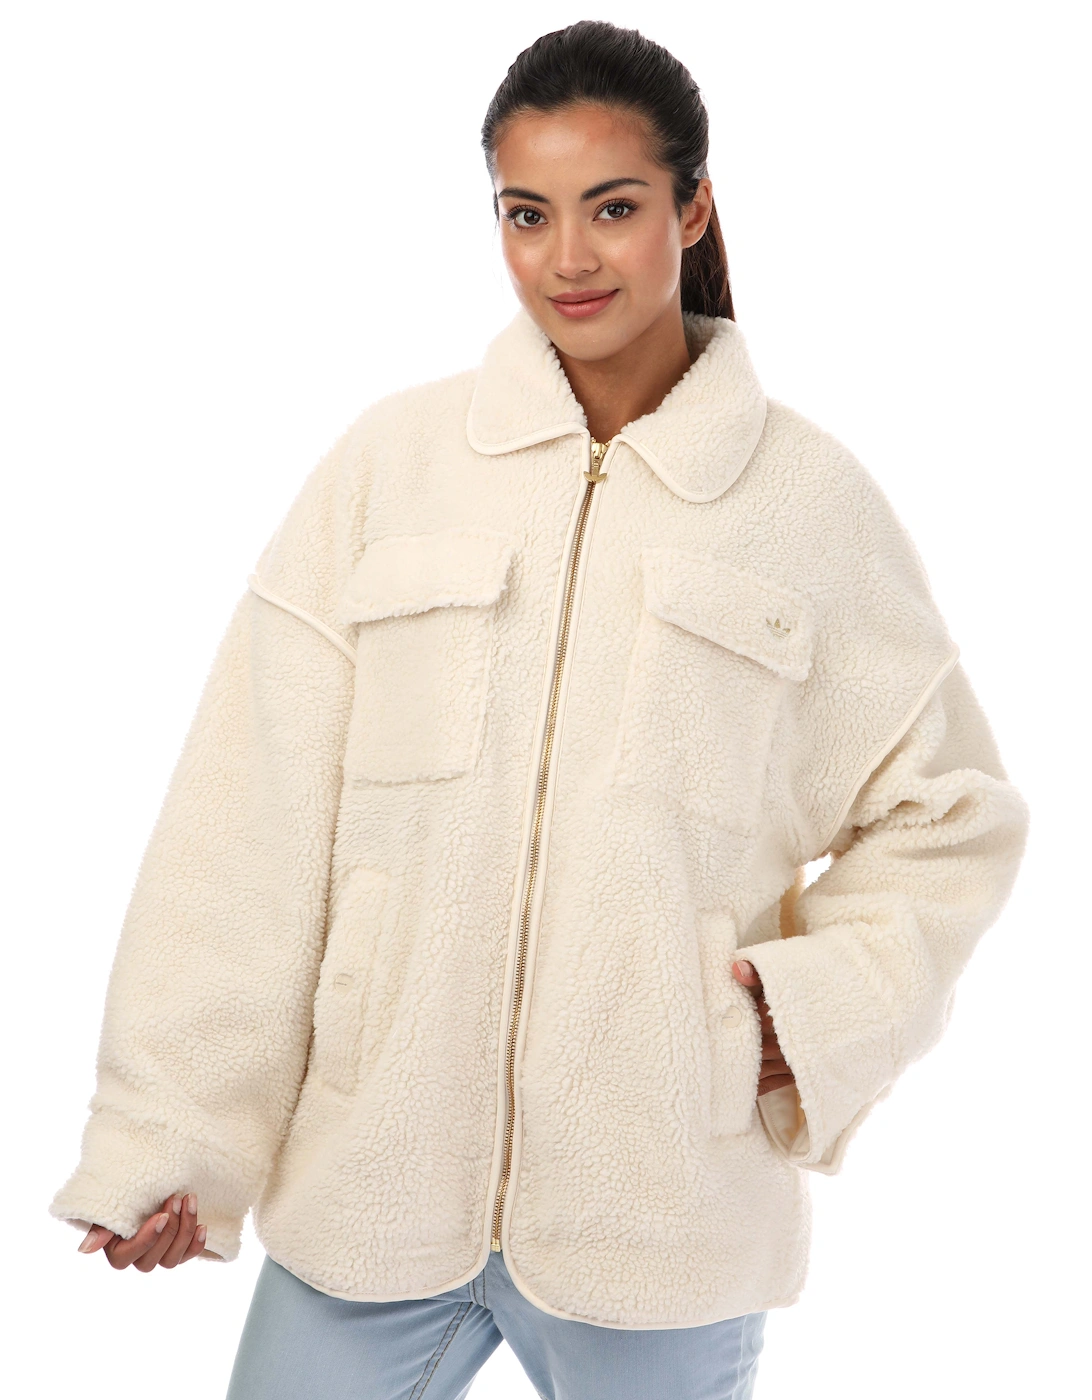 Adidas Originals Women's Womens Sherpa Jacket - White - Size: 14